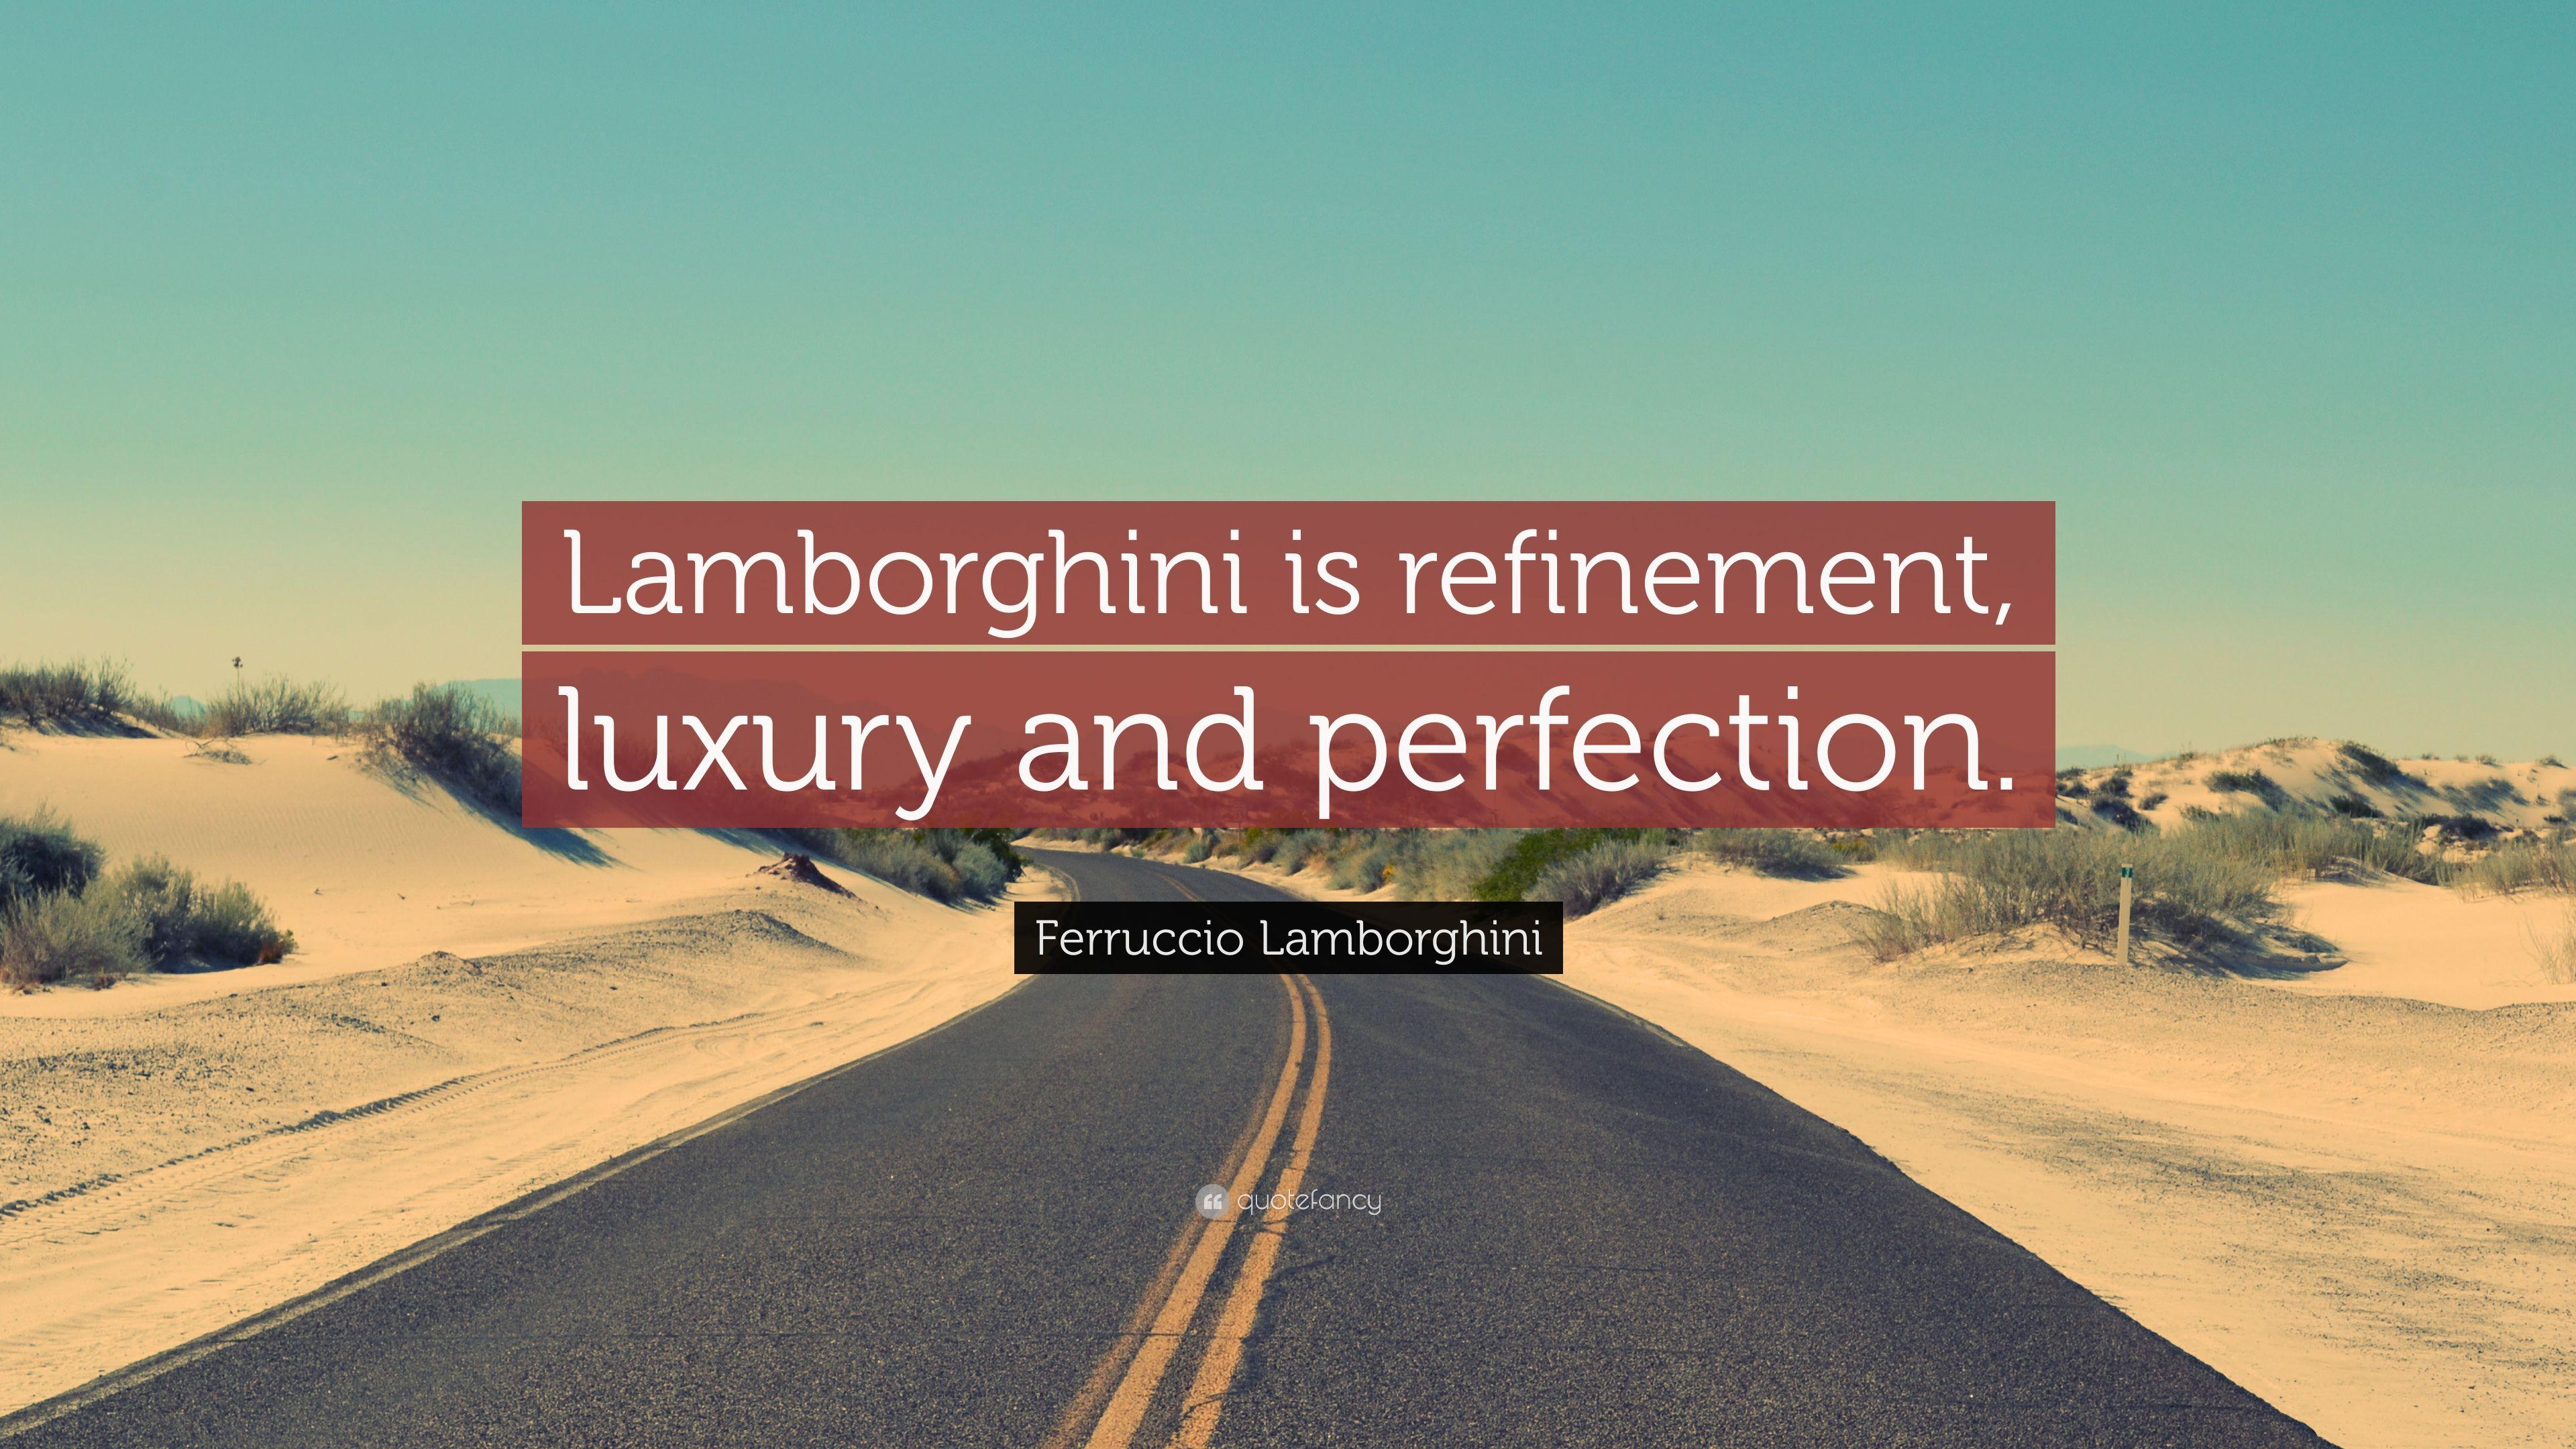 Ferruccio Lamborghini Quote: “Lamborghini is refinement, luxury